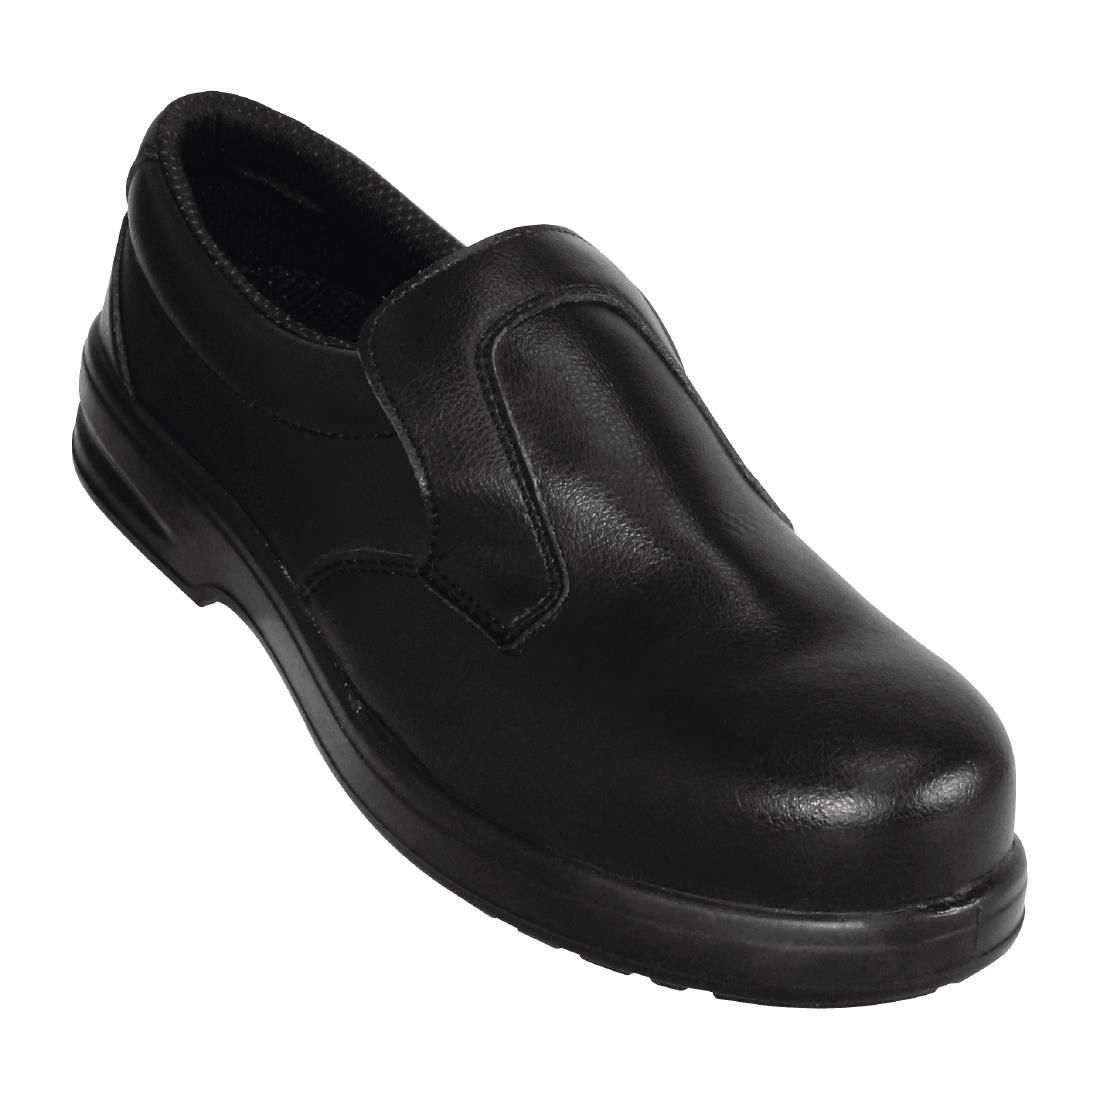 Slipbuster Lite Slip On Safety Shoes Black 45 - A845-45  - 2